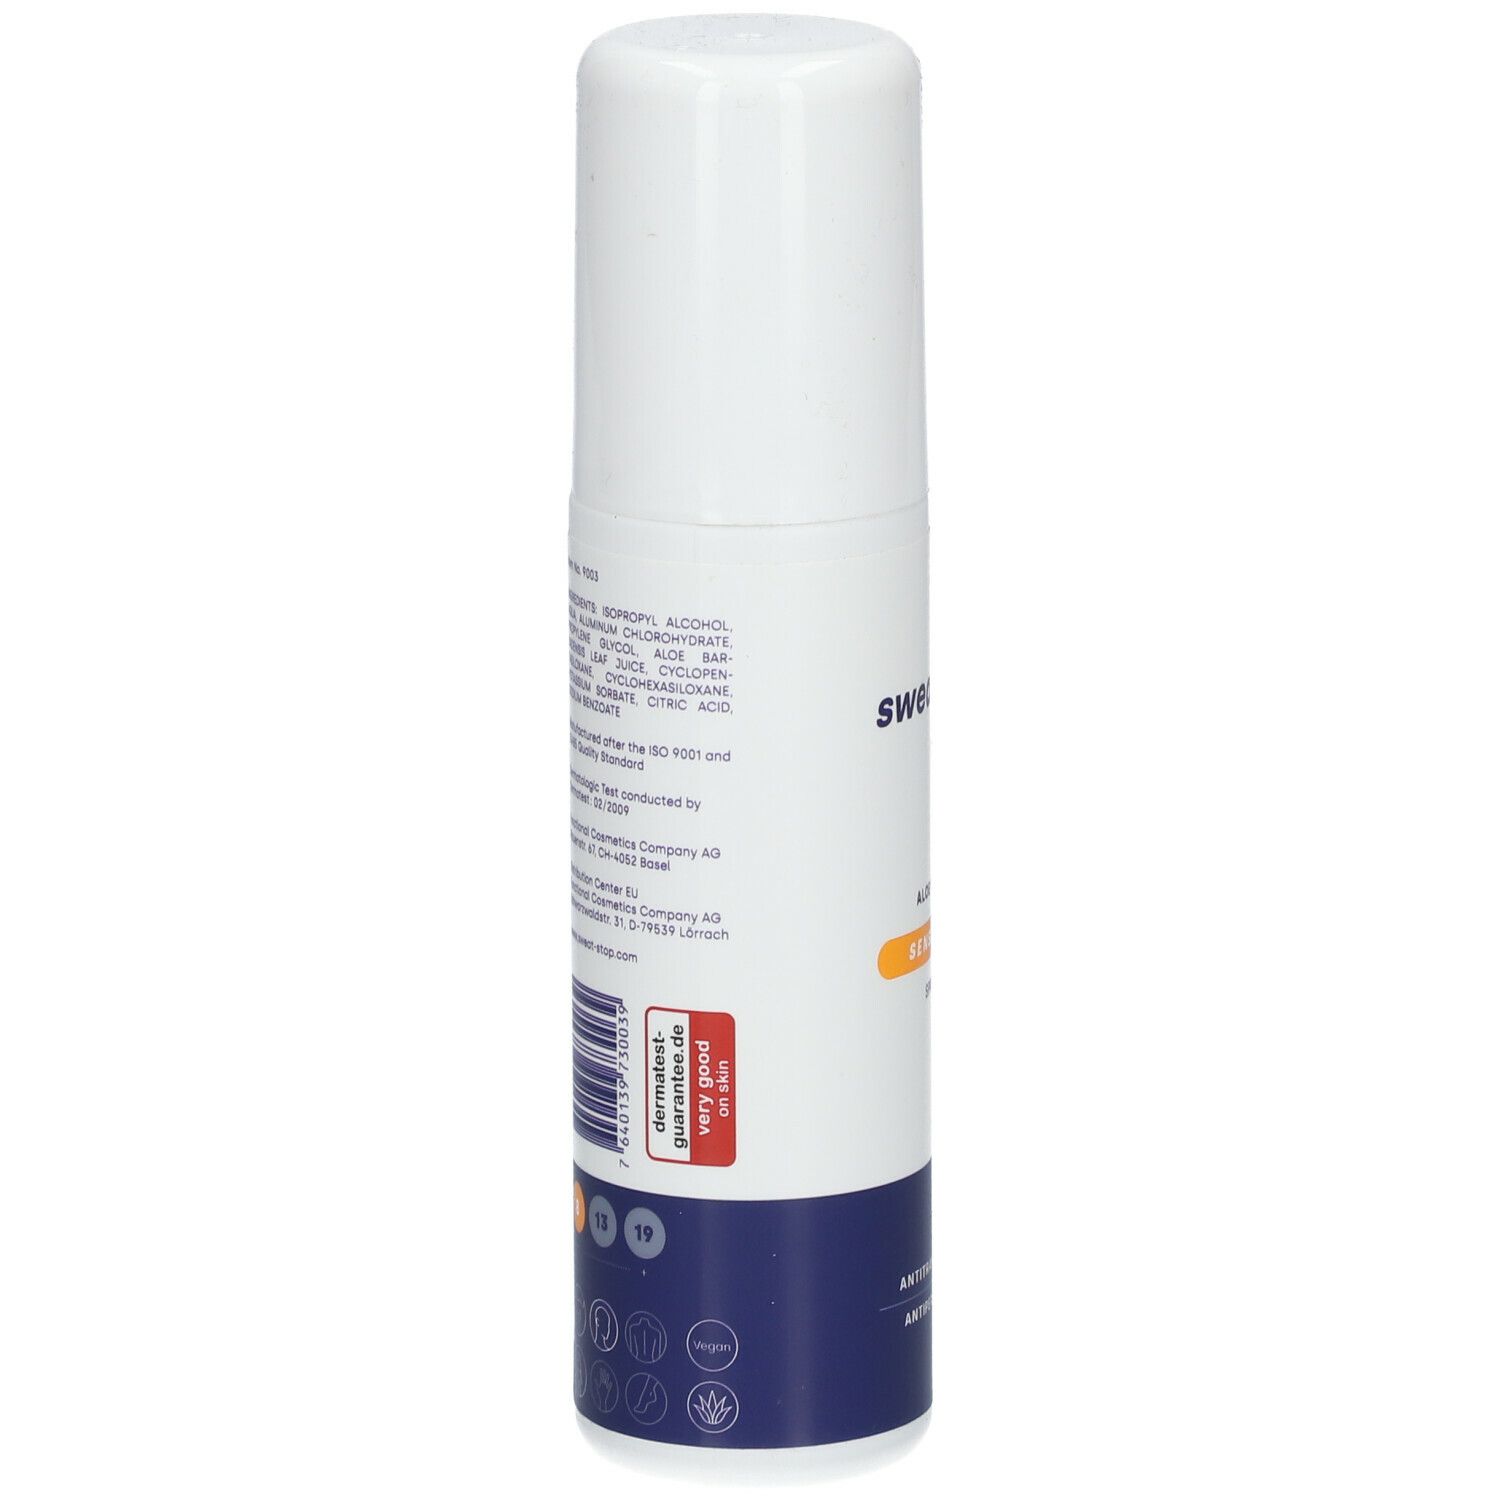 SweatStop® Aloe Vera Sensitive Spray antitranspirant